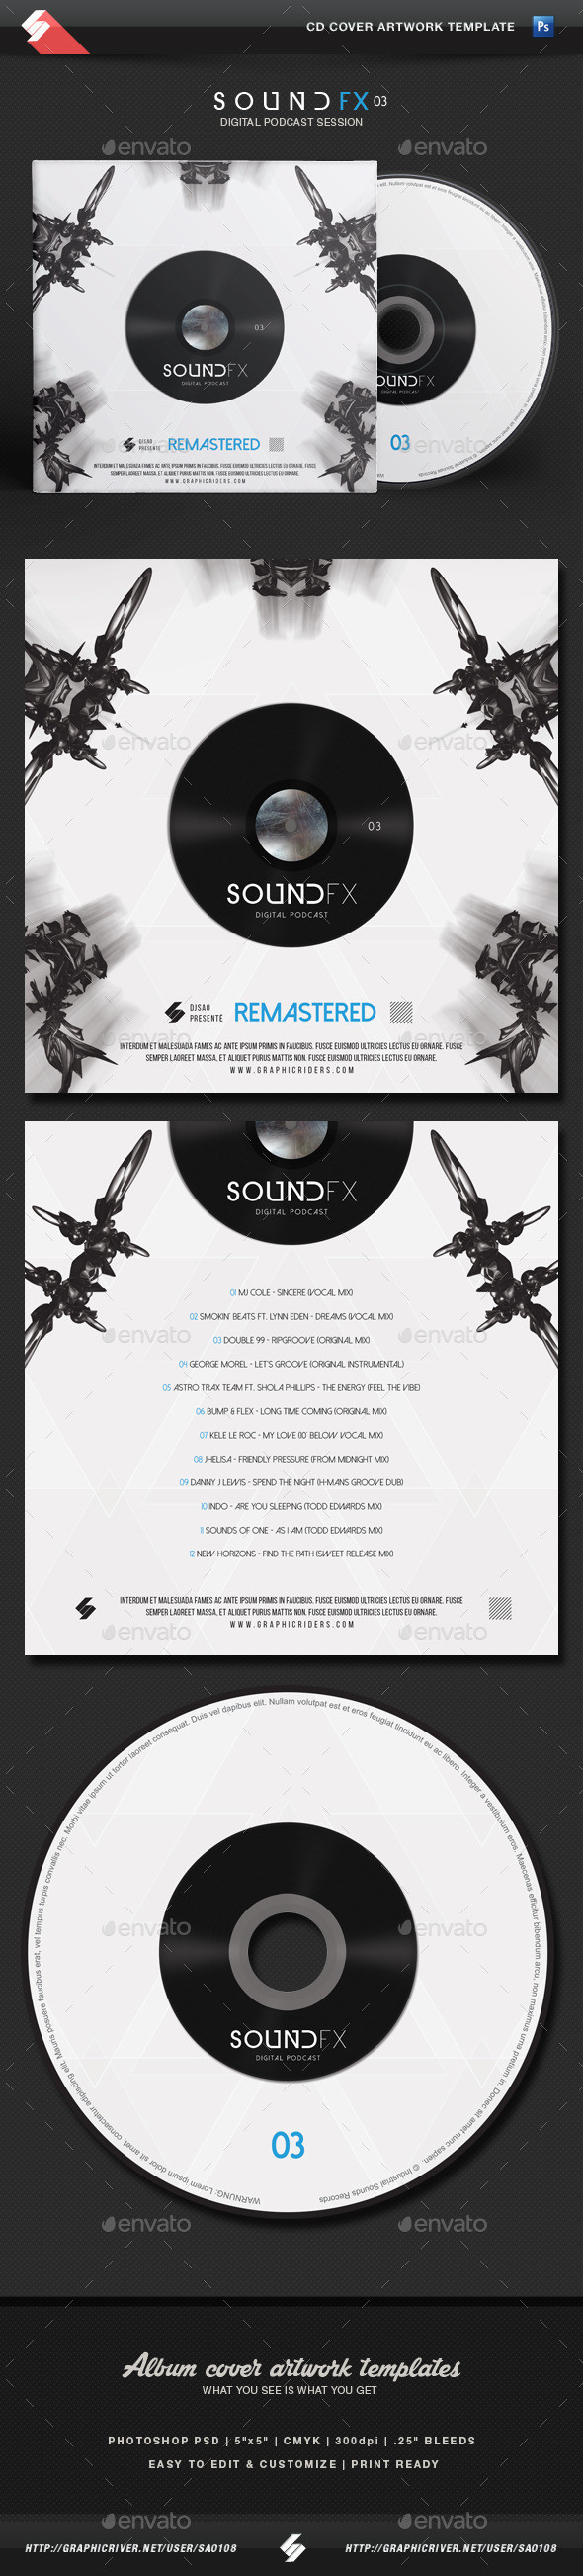 Soundfx3 cd cover template preview